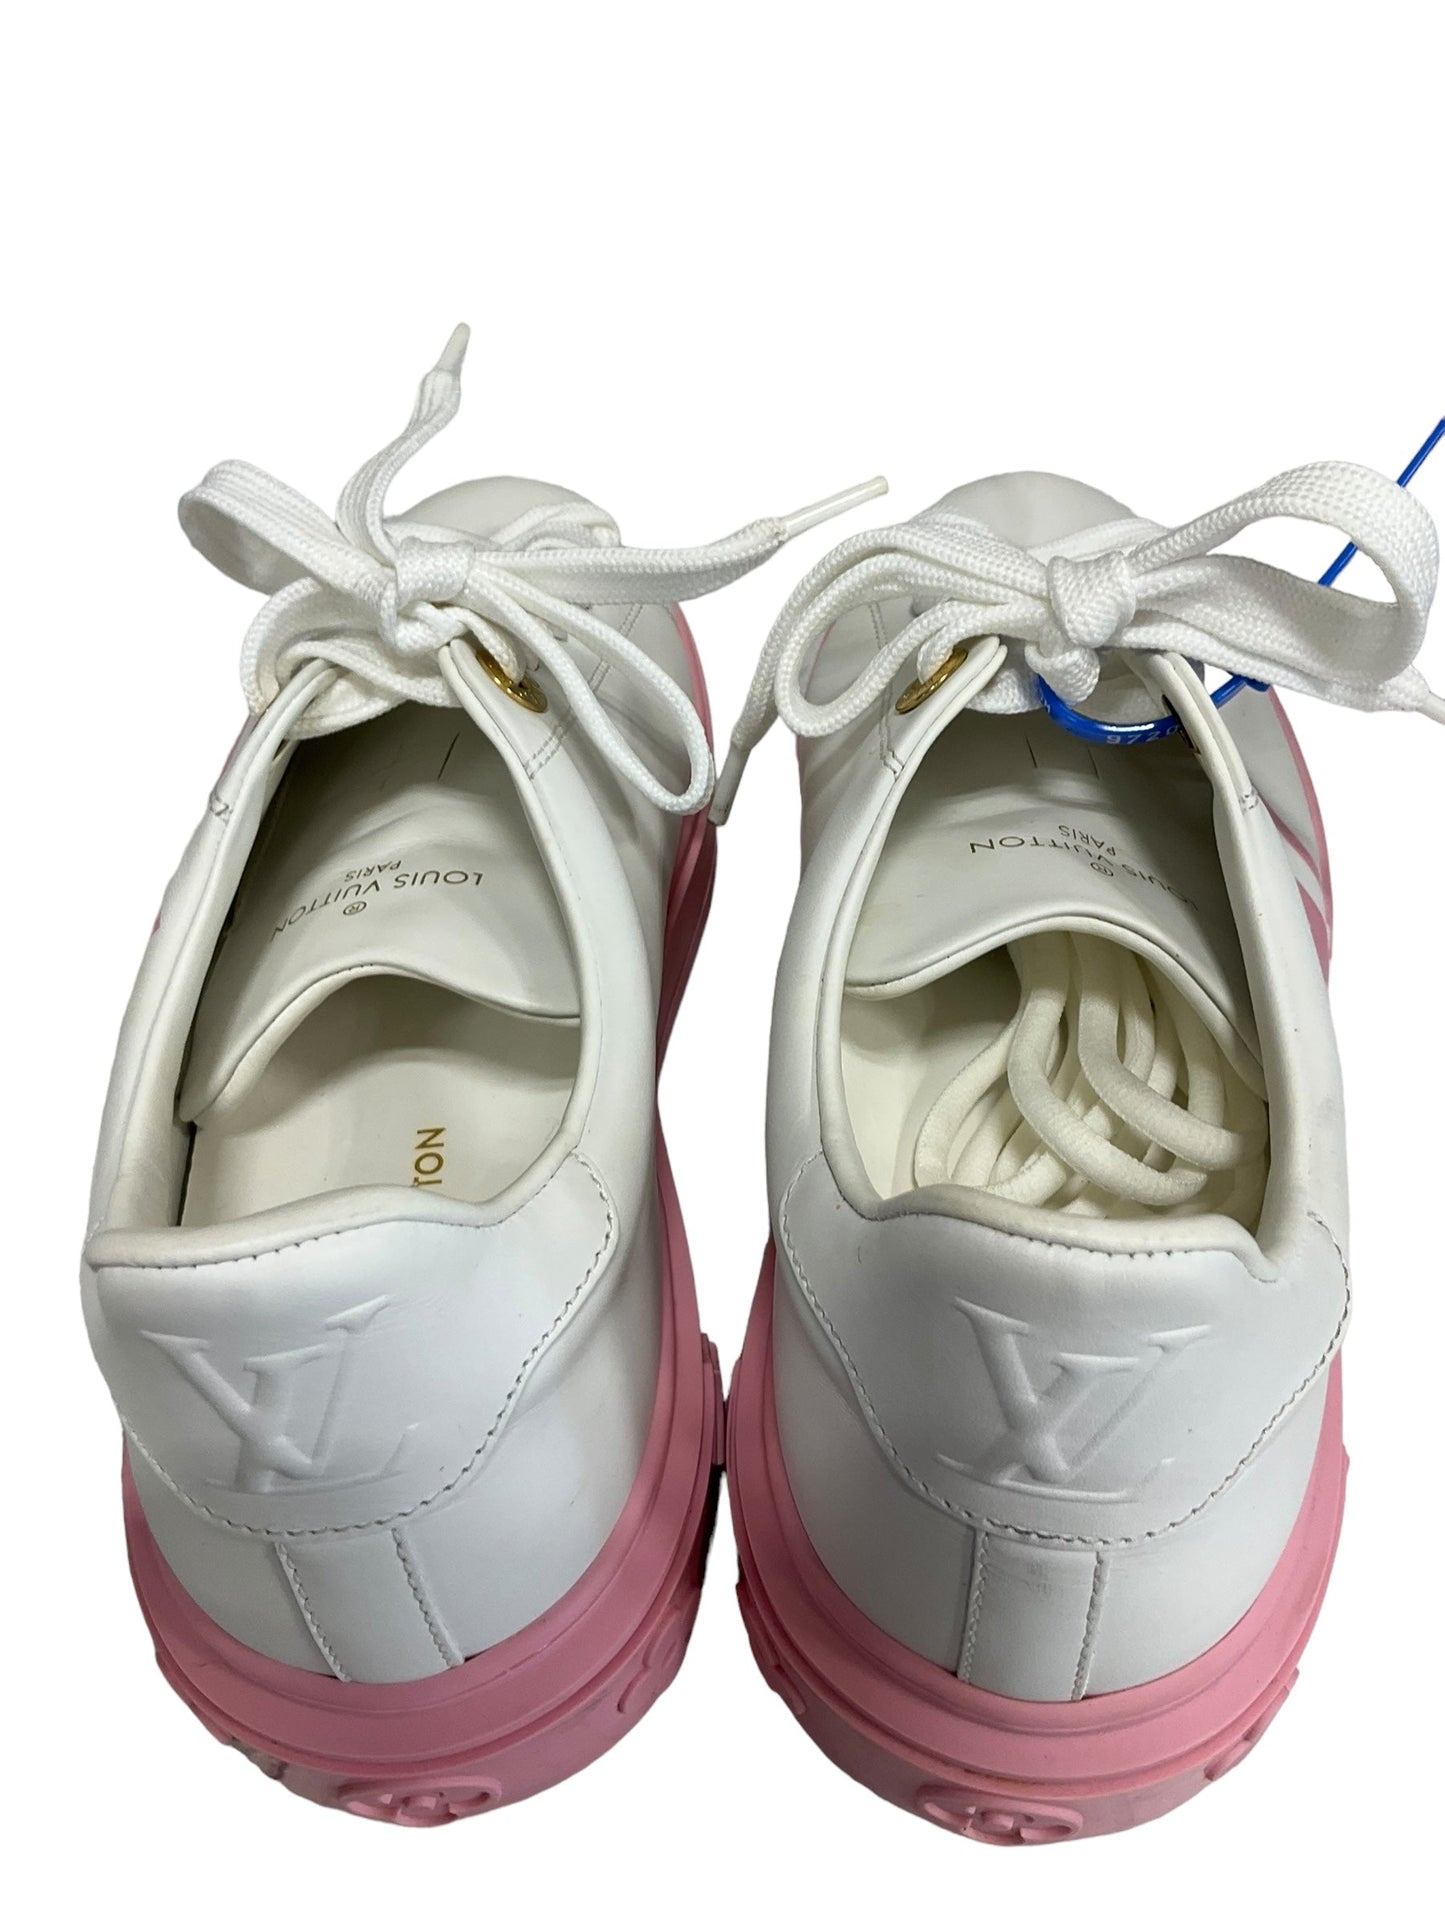 White Shoes Athletic Louis Vuitton, Size 7